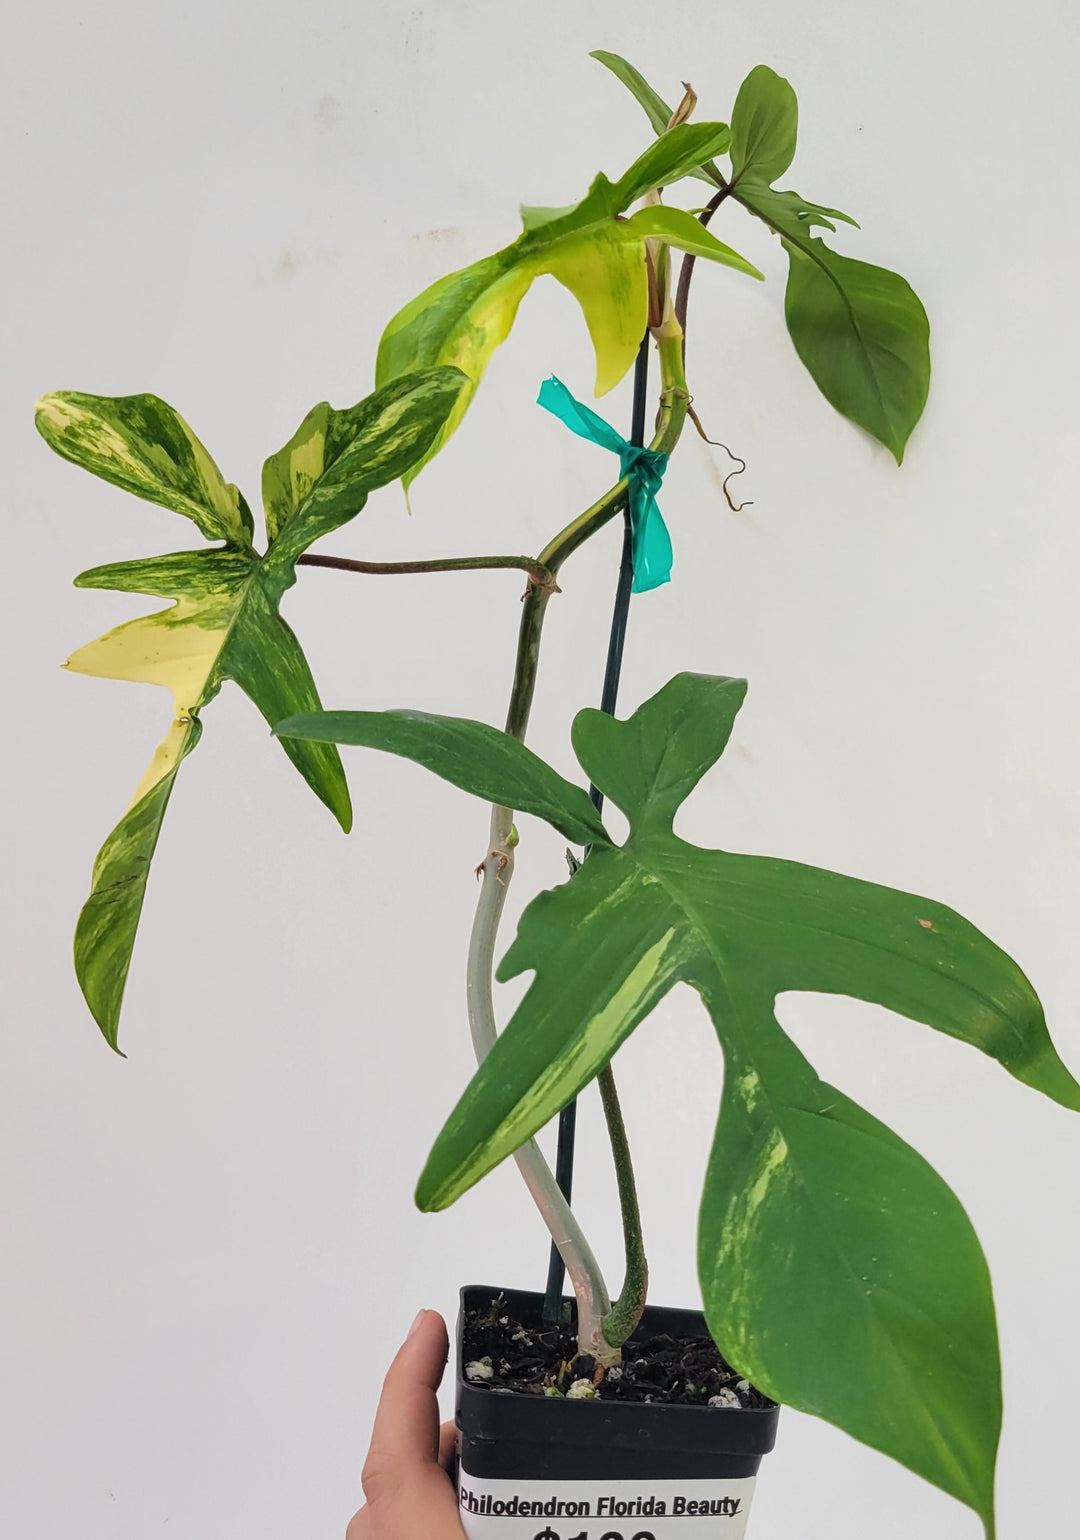 Philodendron Florida Beauty variegated,  variegated Wishlist plant,  established & unusual,  tropical houseplant, US Seller- F4